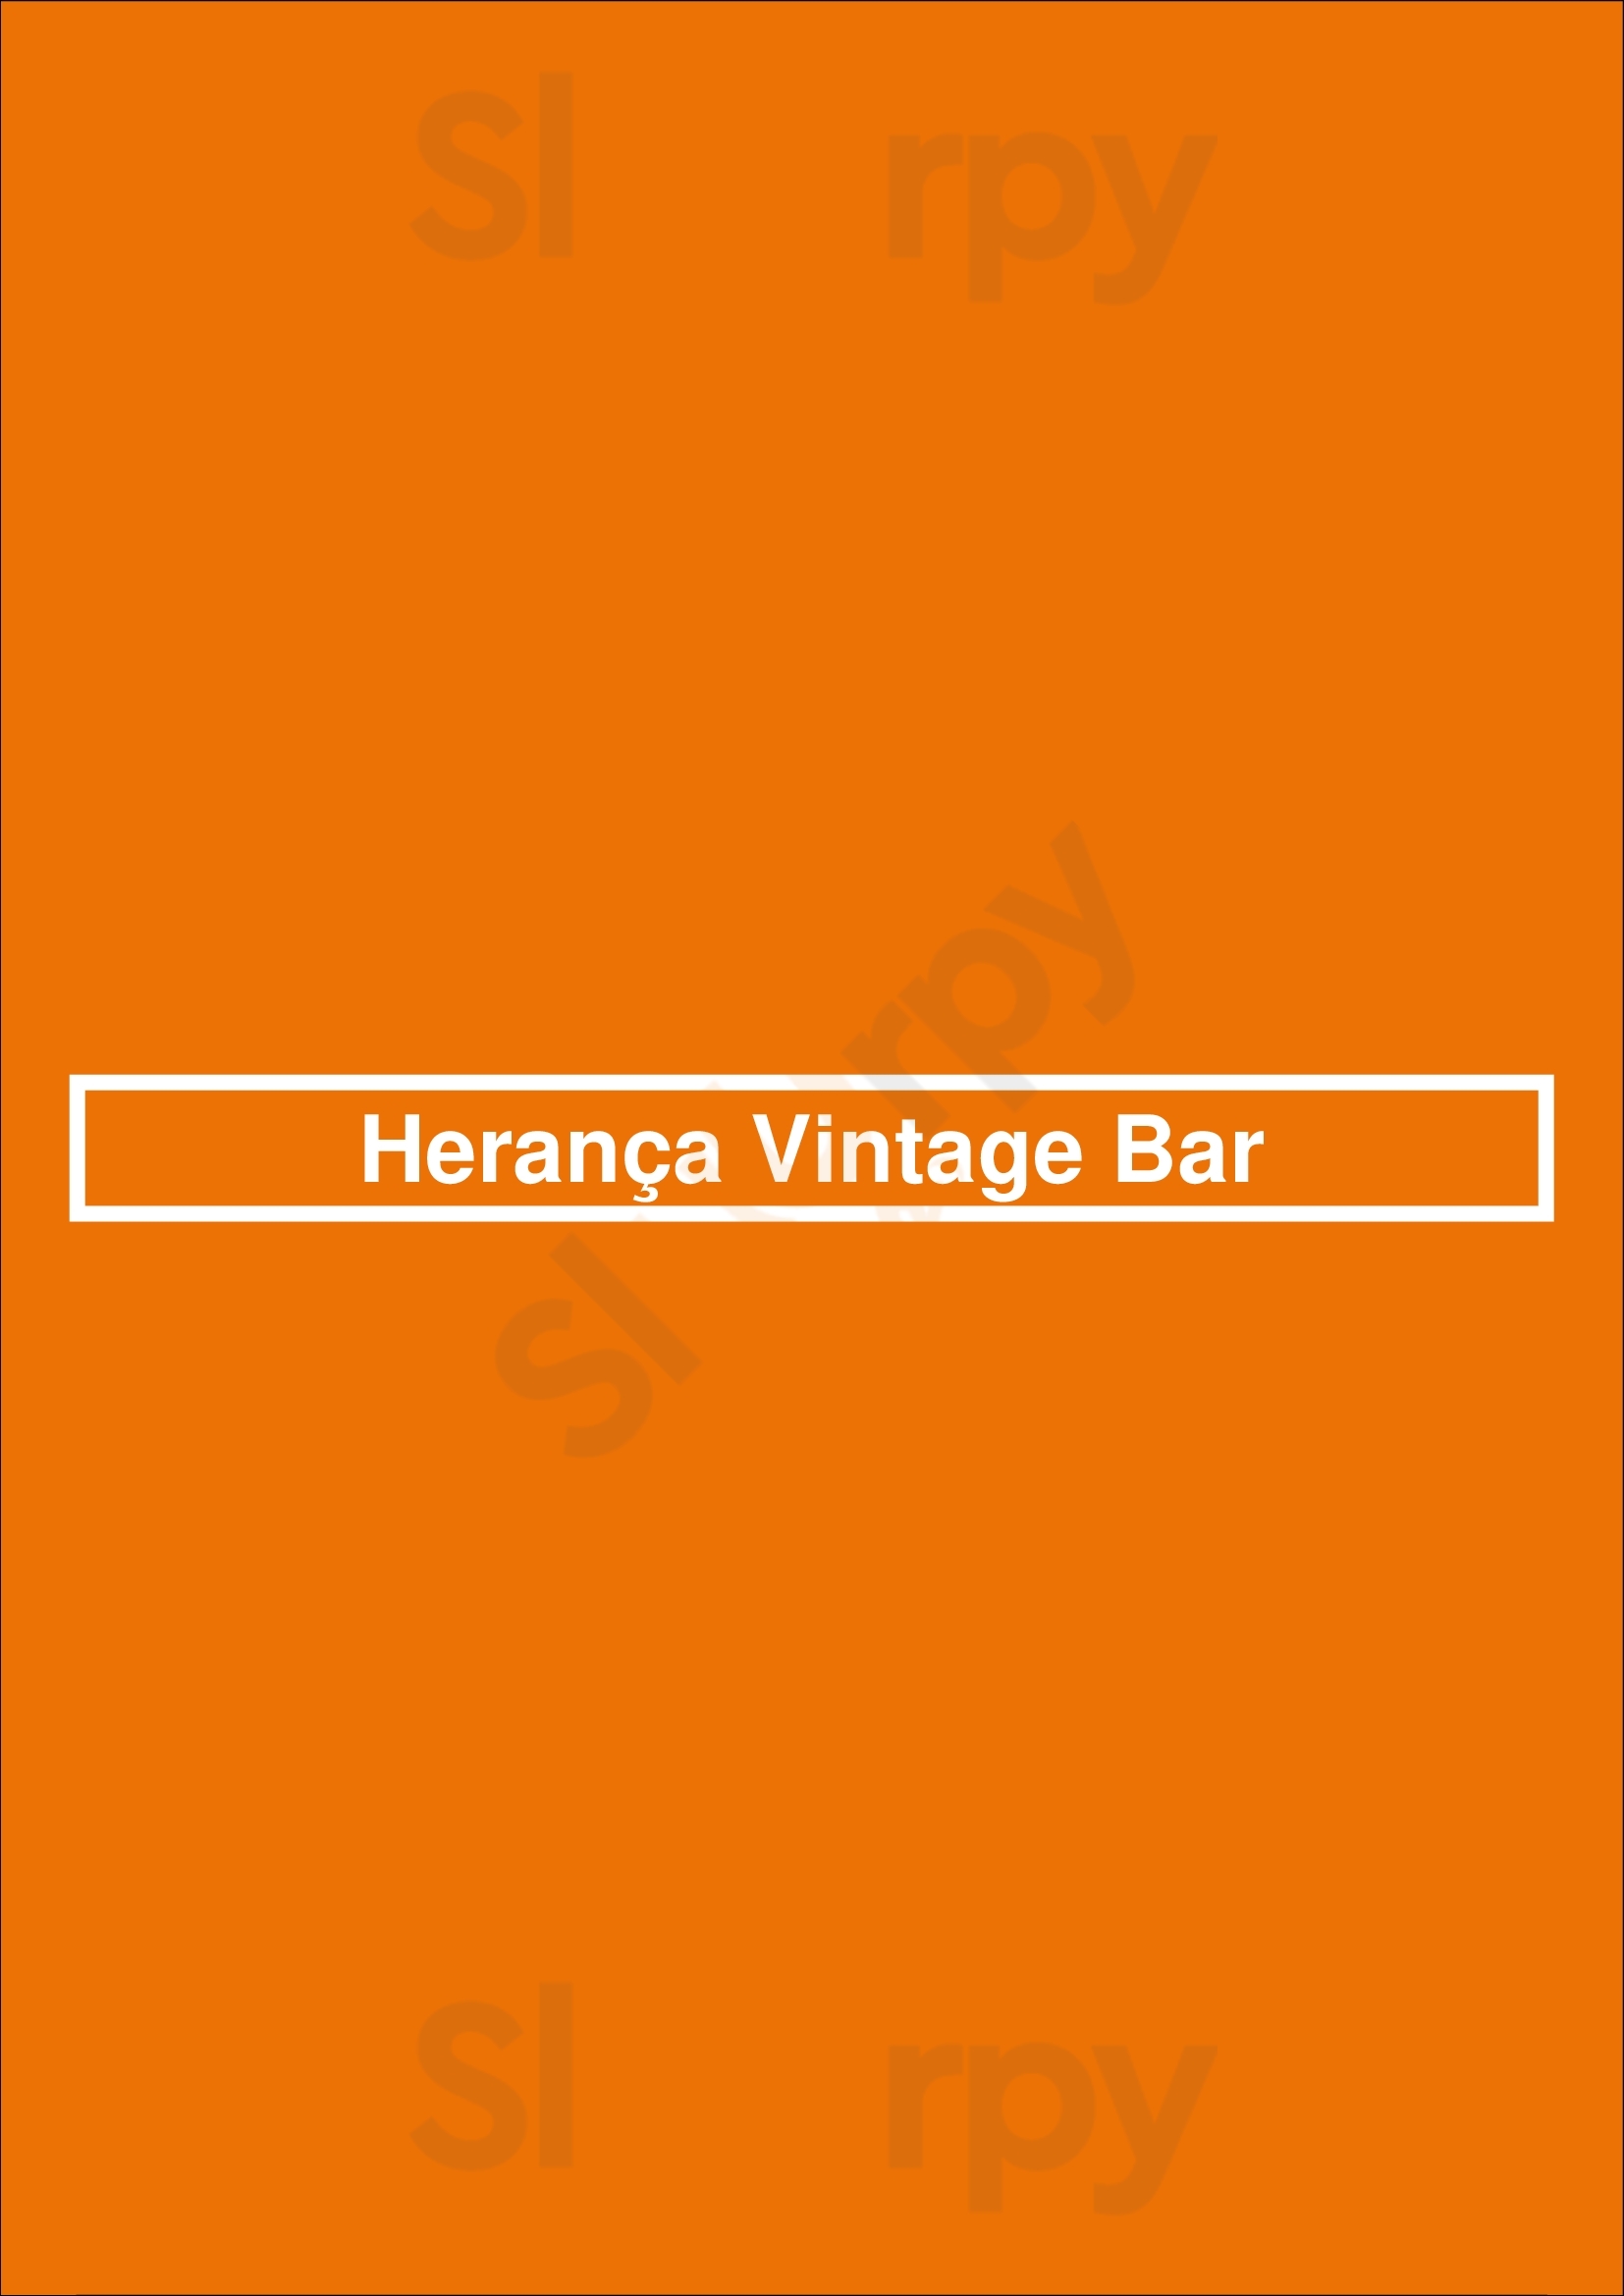 Herança Vintage Bar Lisboa Menu - 1